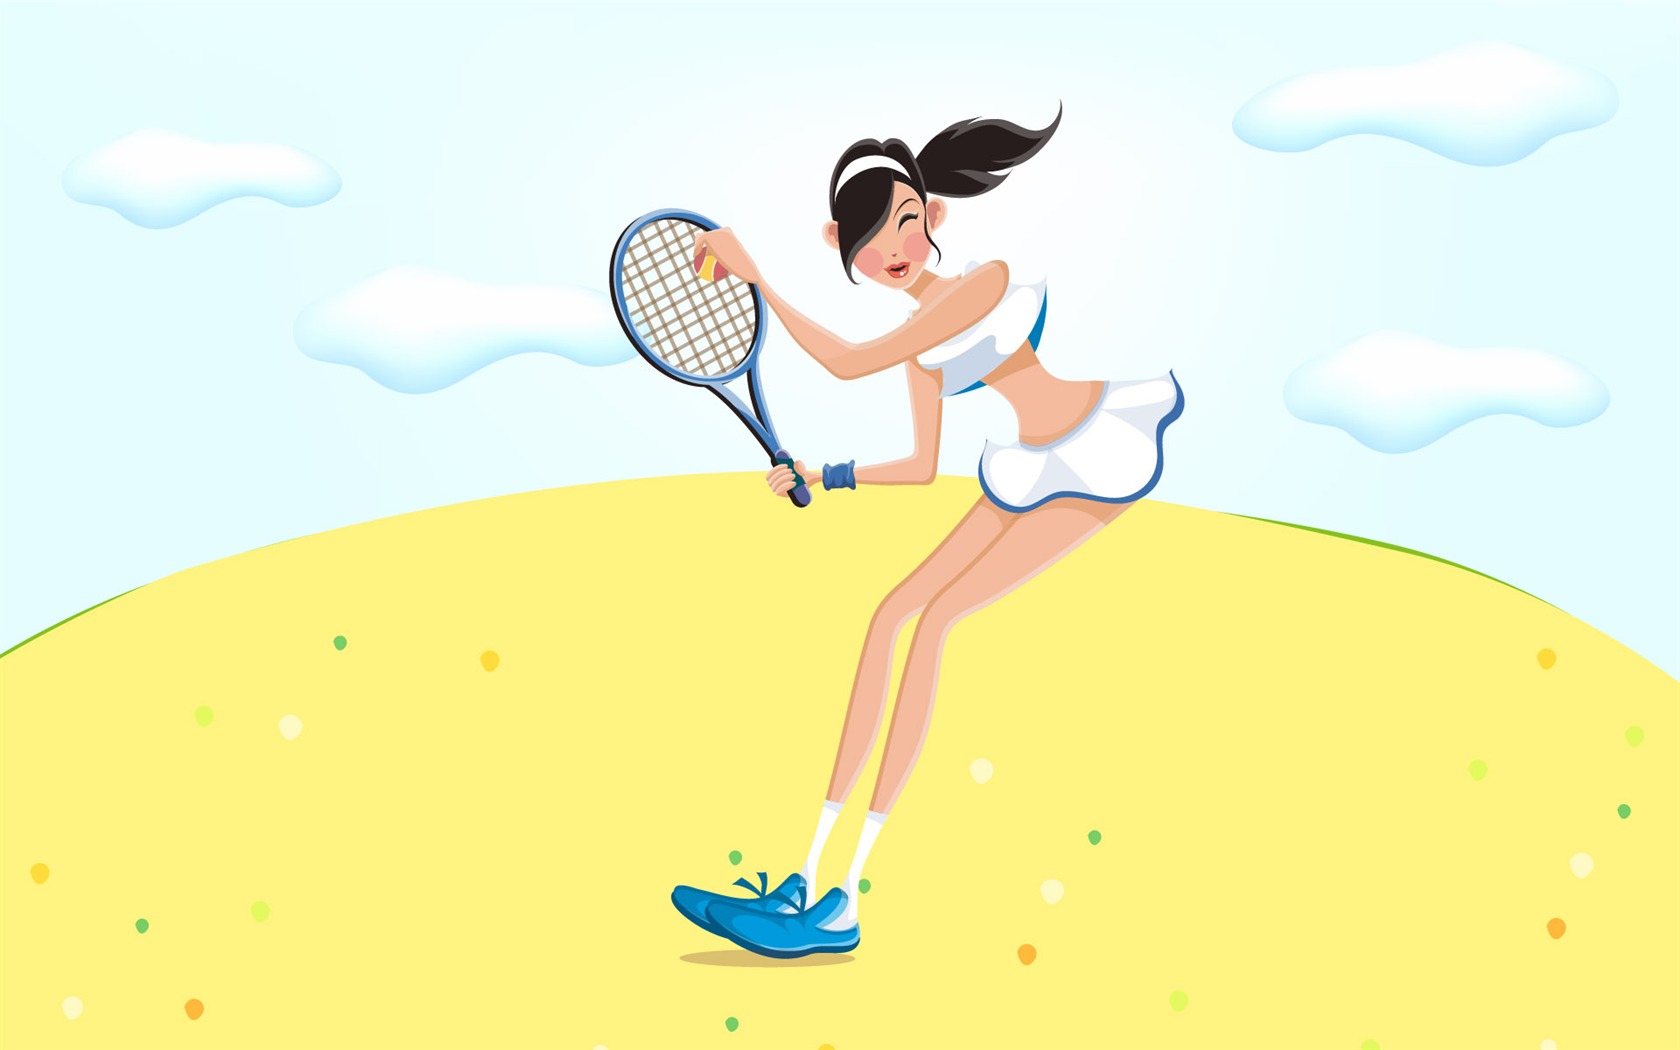 Women's leisure sports vector #13 - 1680x1050